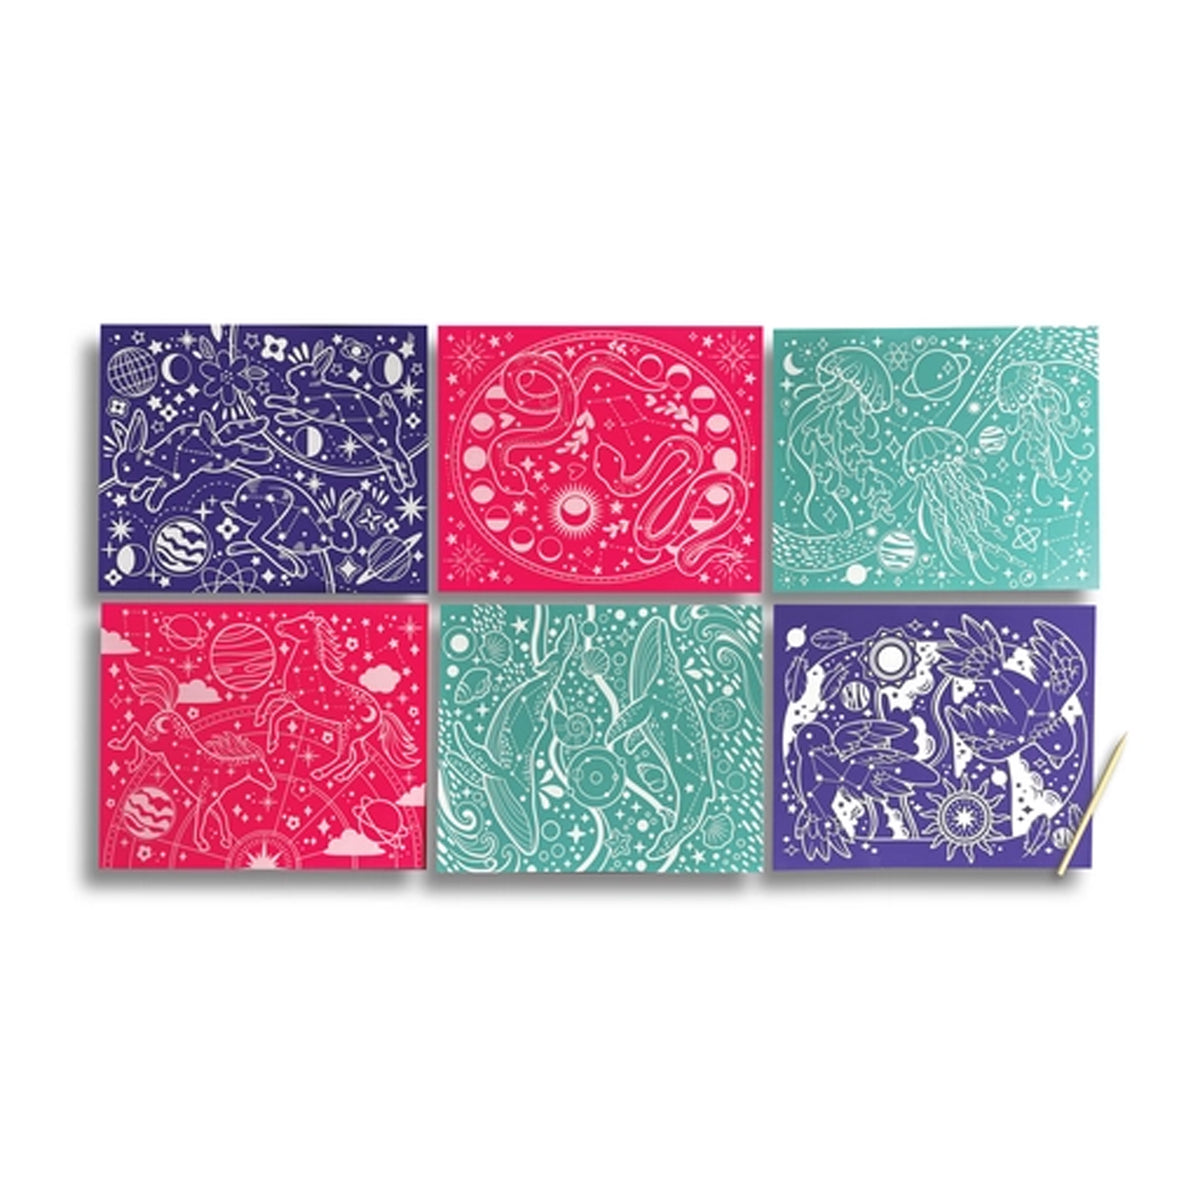 Scratch &amp; Shine Scratch Cards - Celestial Skies (7 Pc Set)